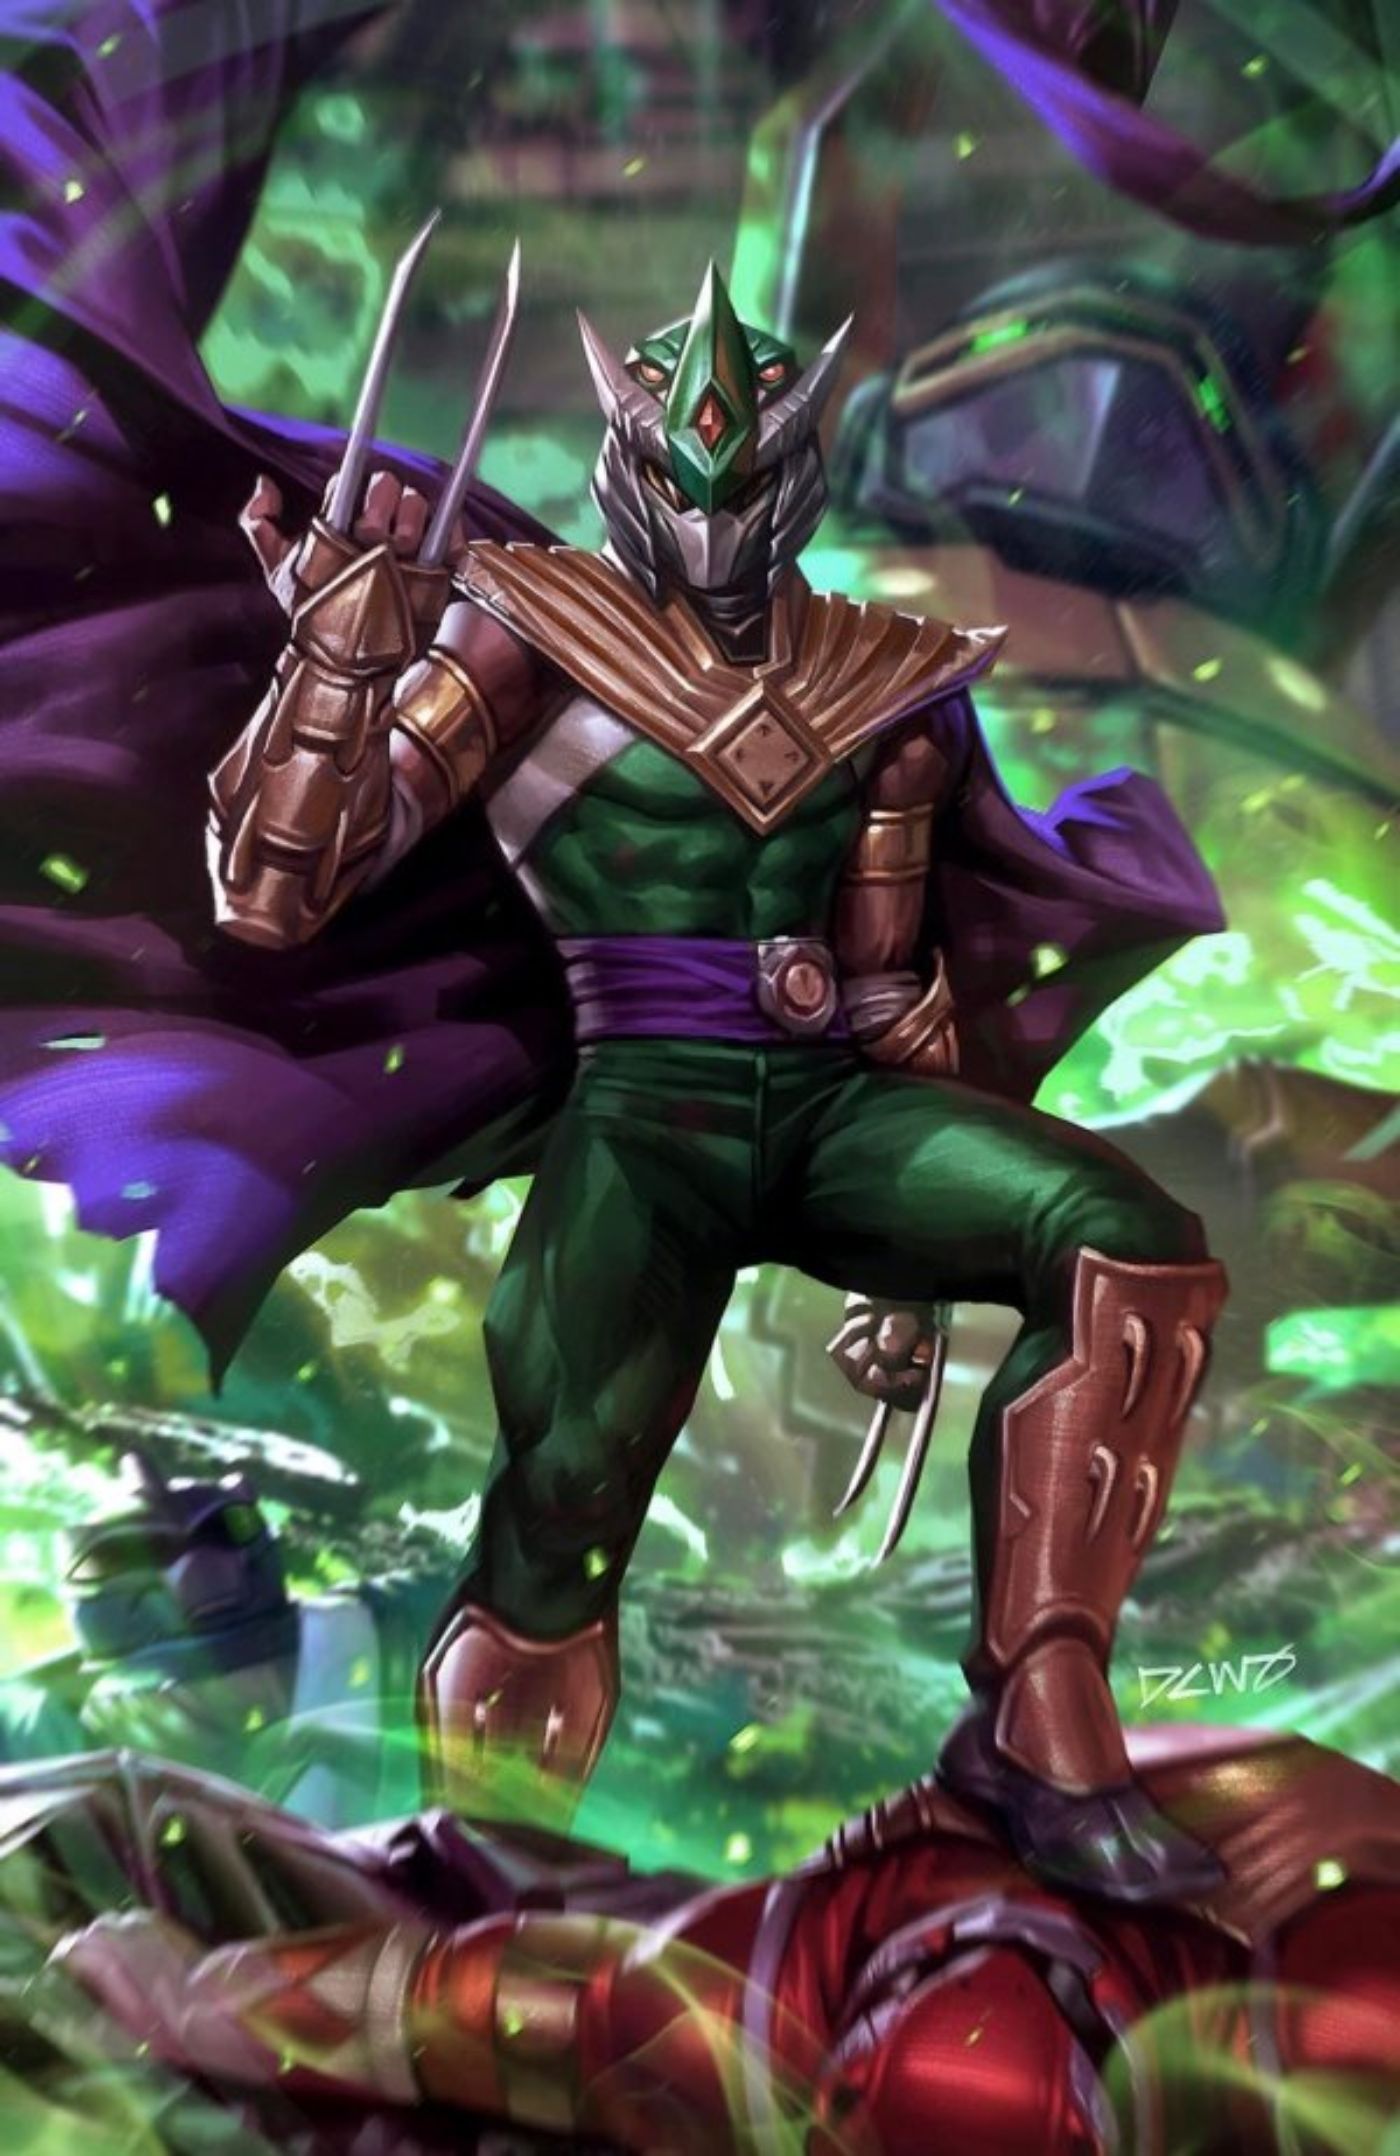 Power Rangers/TMNT Crossover Art Redesigns Shredder as a Green Ranger